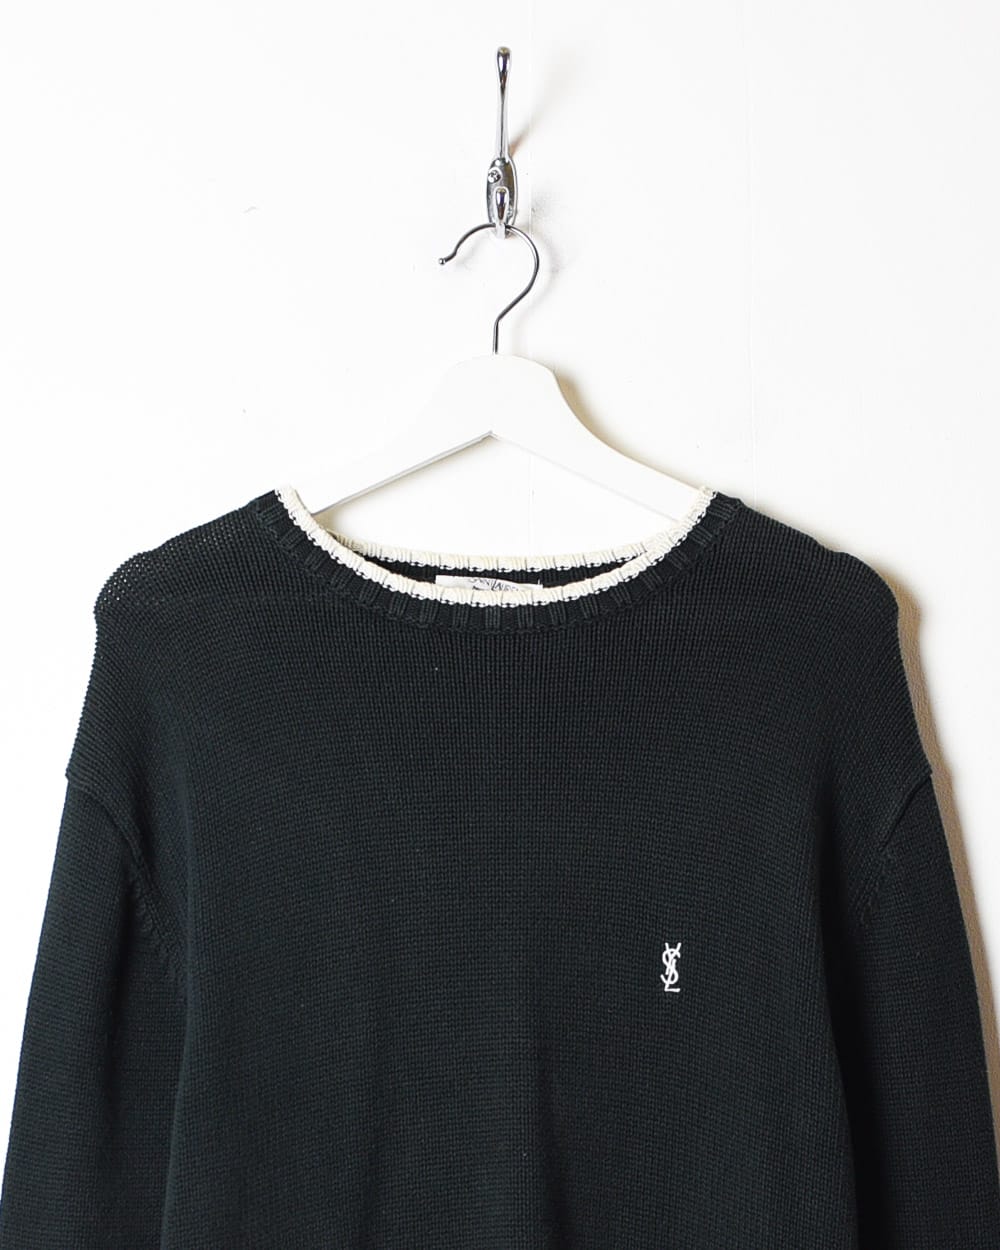 Black Yves Saint Laurent Knitted Sweatshirt - Medium